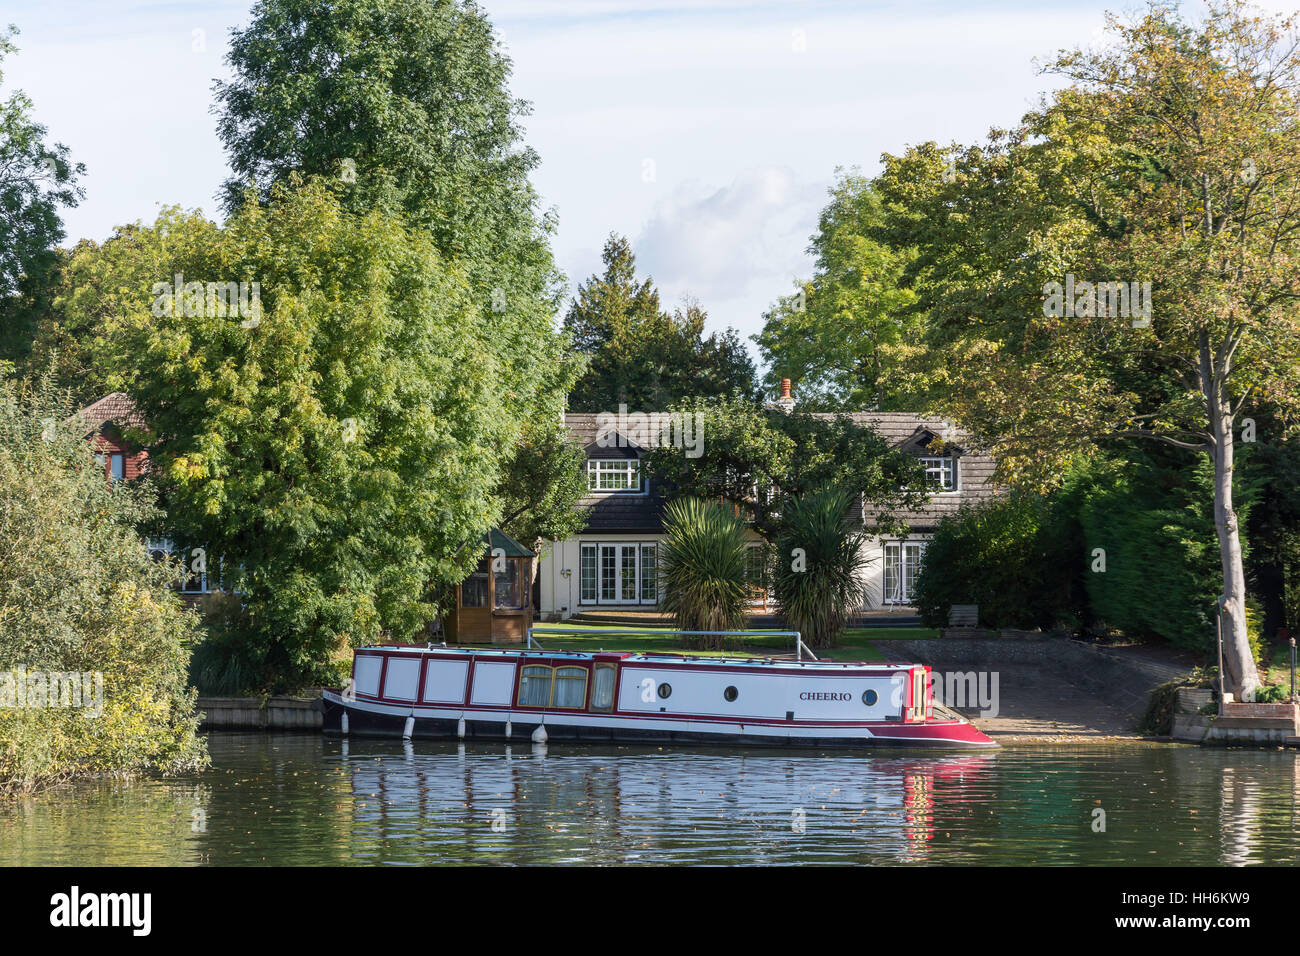 Riverside house et canal boat par Tamise, Runnymede, Surrey, Angleterre, Royaume-Uni Banque D'Images